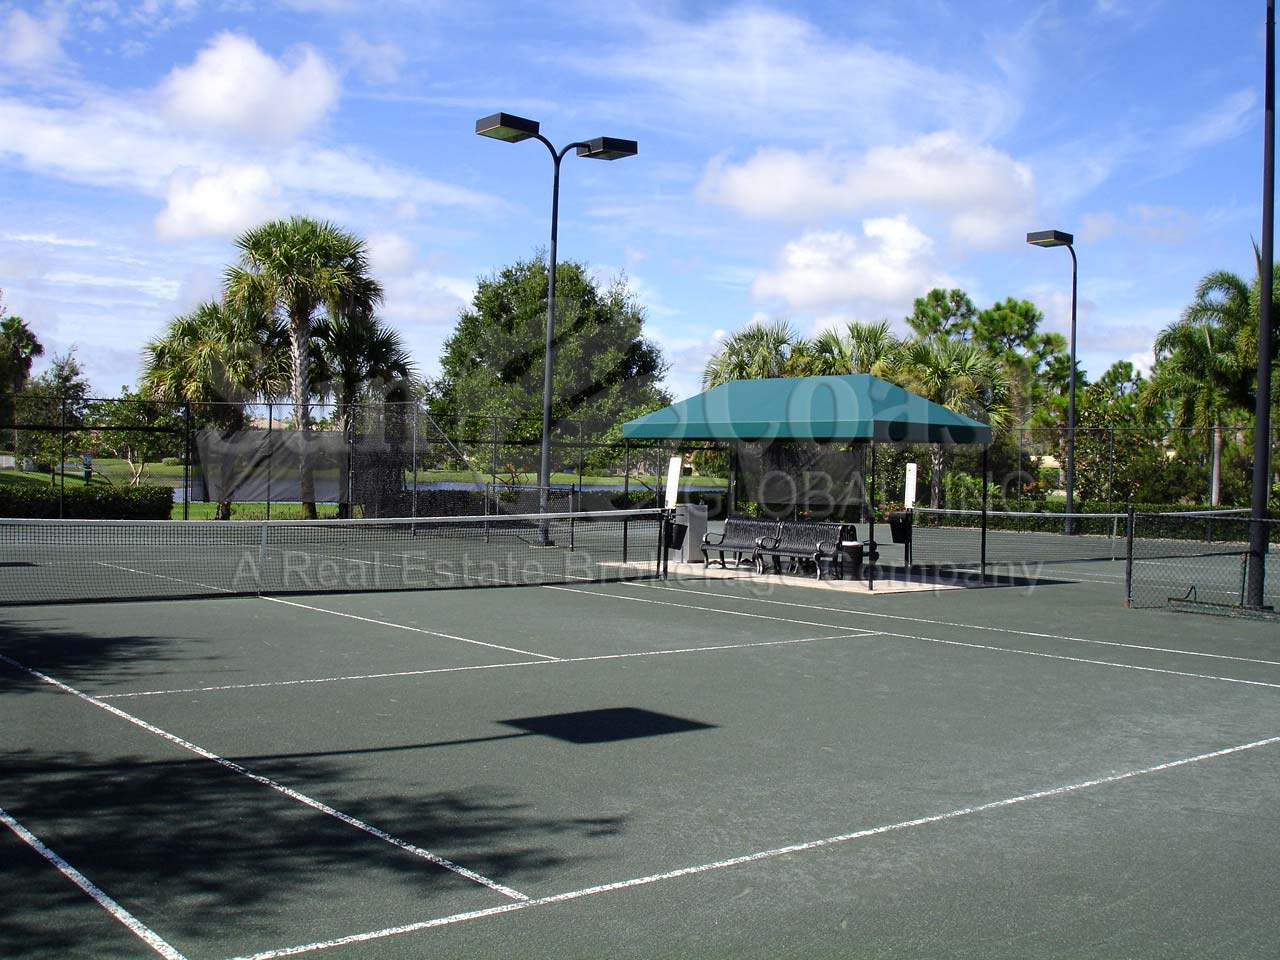 SATURNIA LAKES Tennis Courts